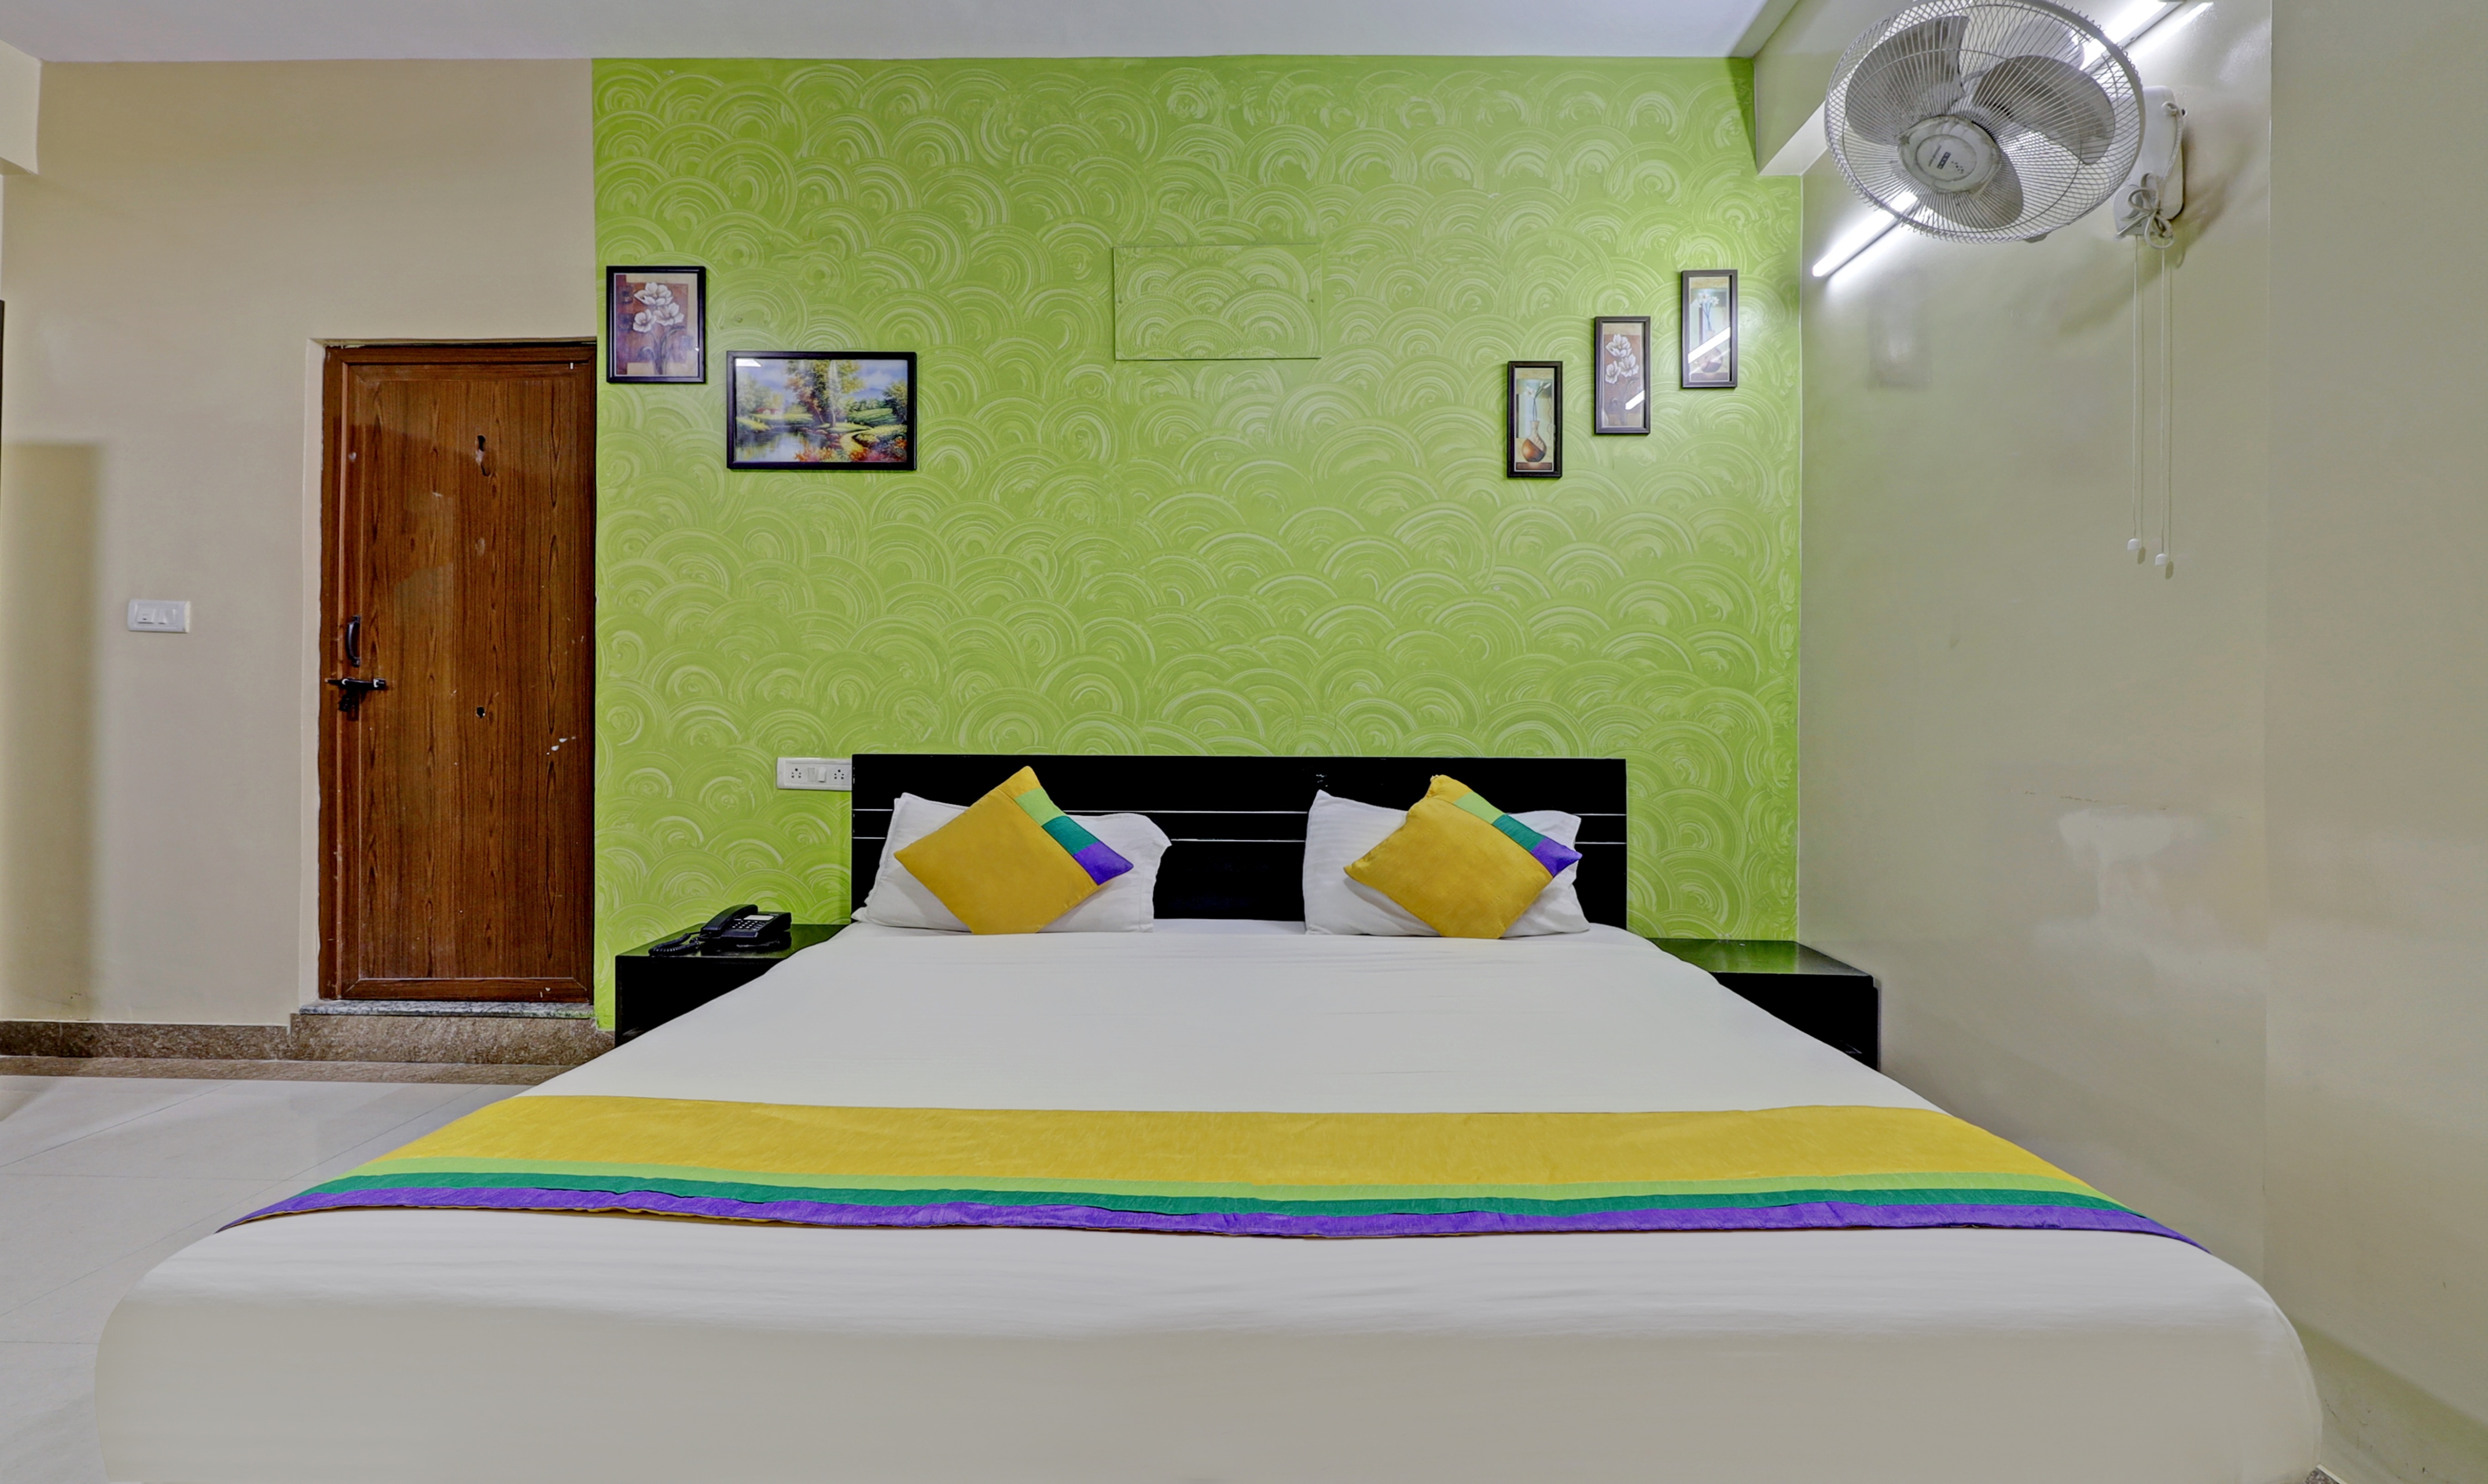 3 Star Hotels in Jayanagar 3rd Block, Bangalore, Bangalore - Get